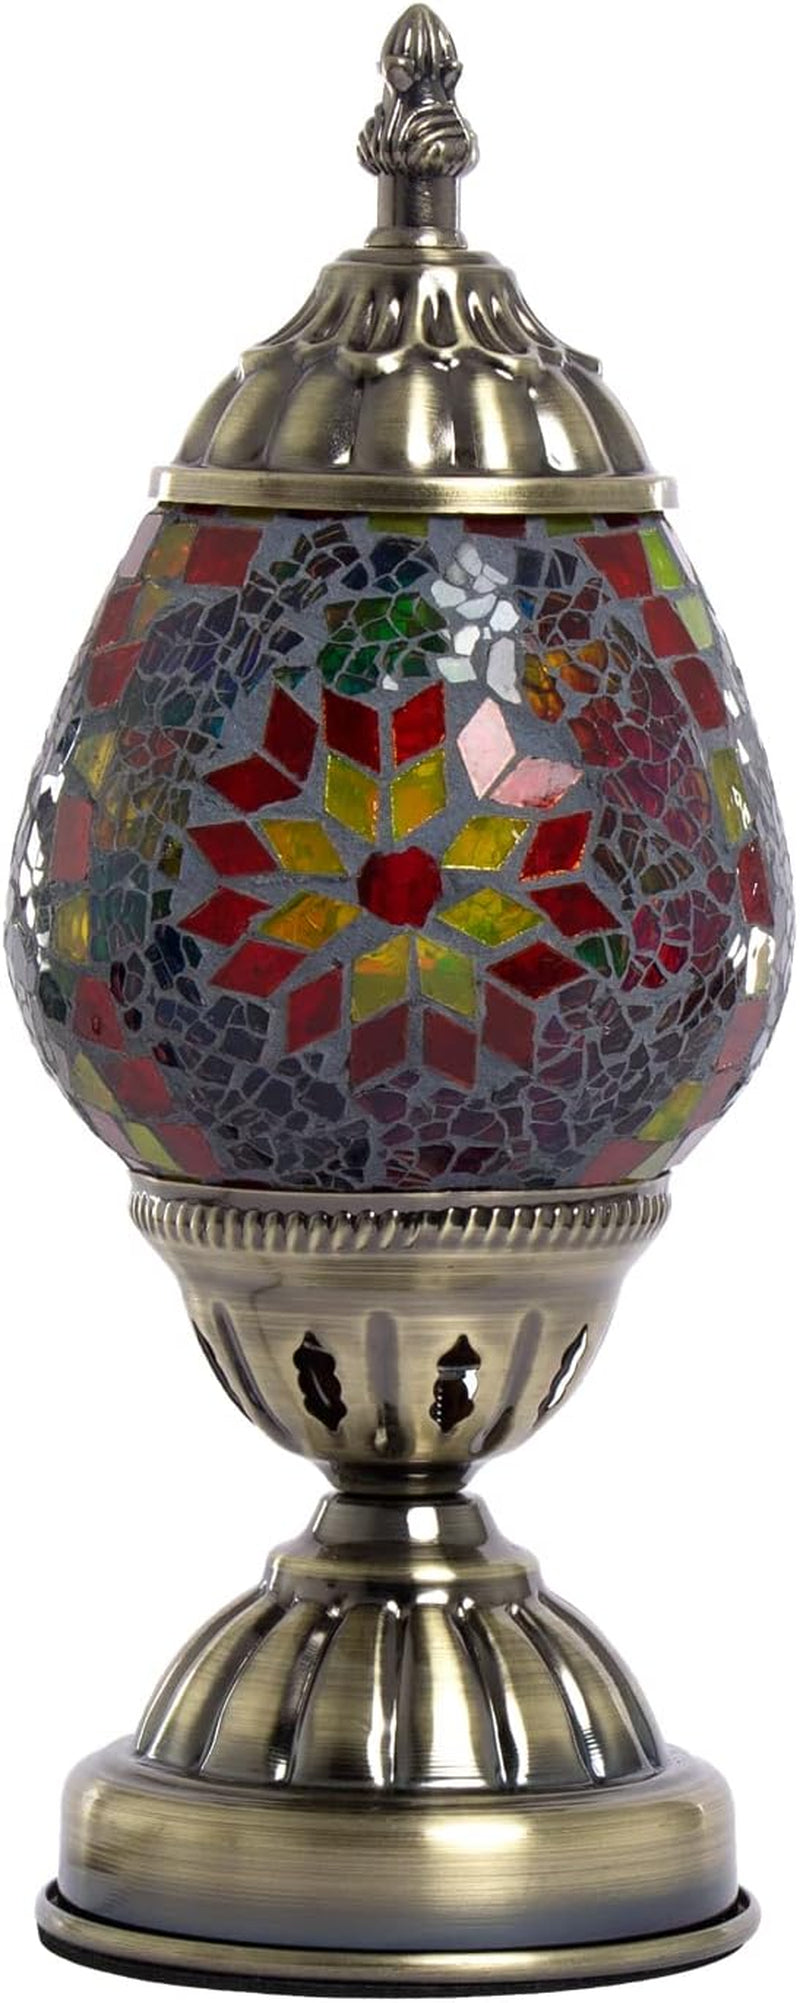 ANTON Handmade Turkish Lamp Mosaic Glass Egg Lantern Bedside Table Desk Night Lamp Decorative Tiffany Moroccan Style